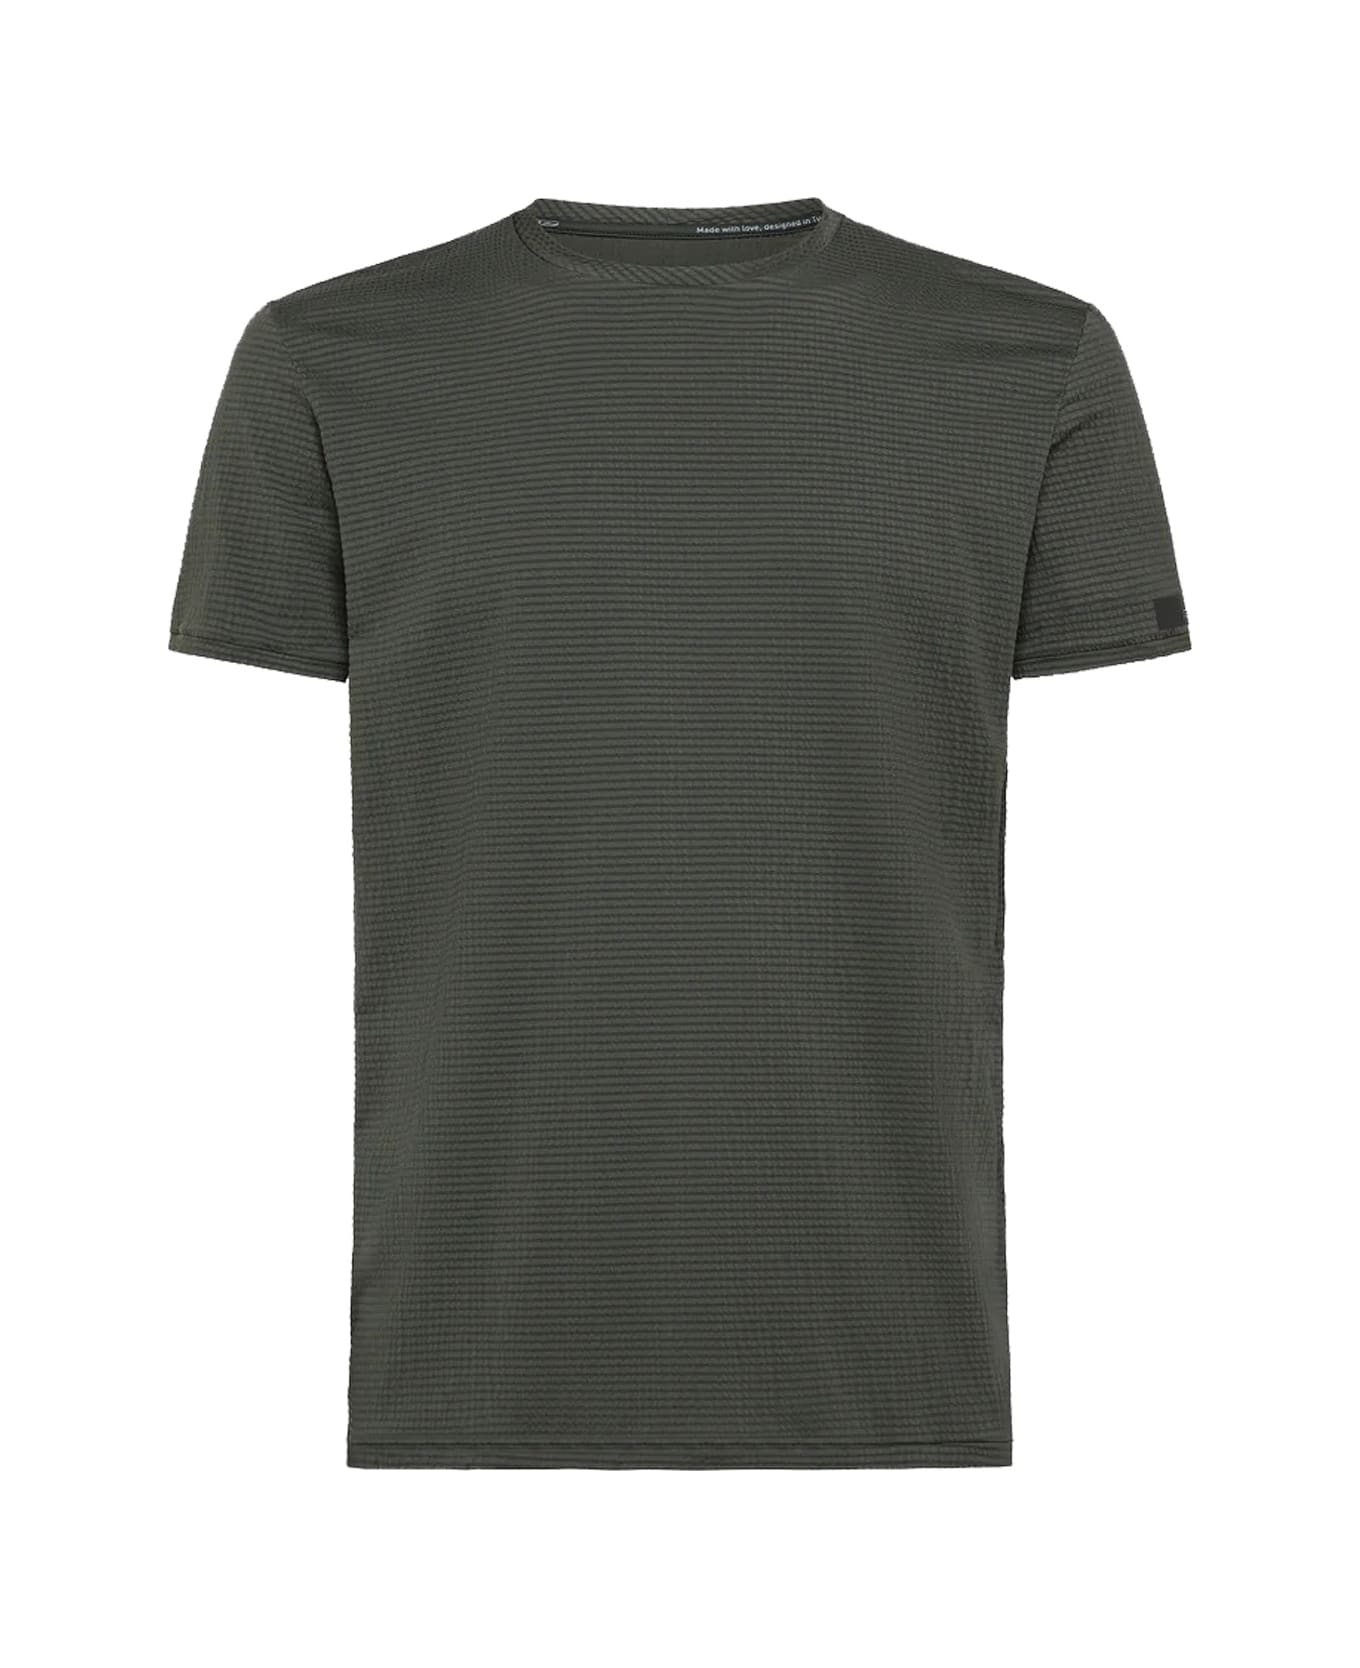 RRD - Roberto Ricci Design T-shirt - Green